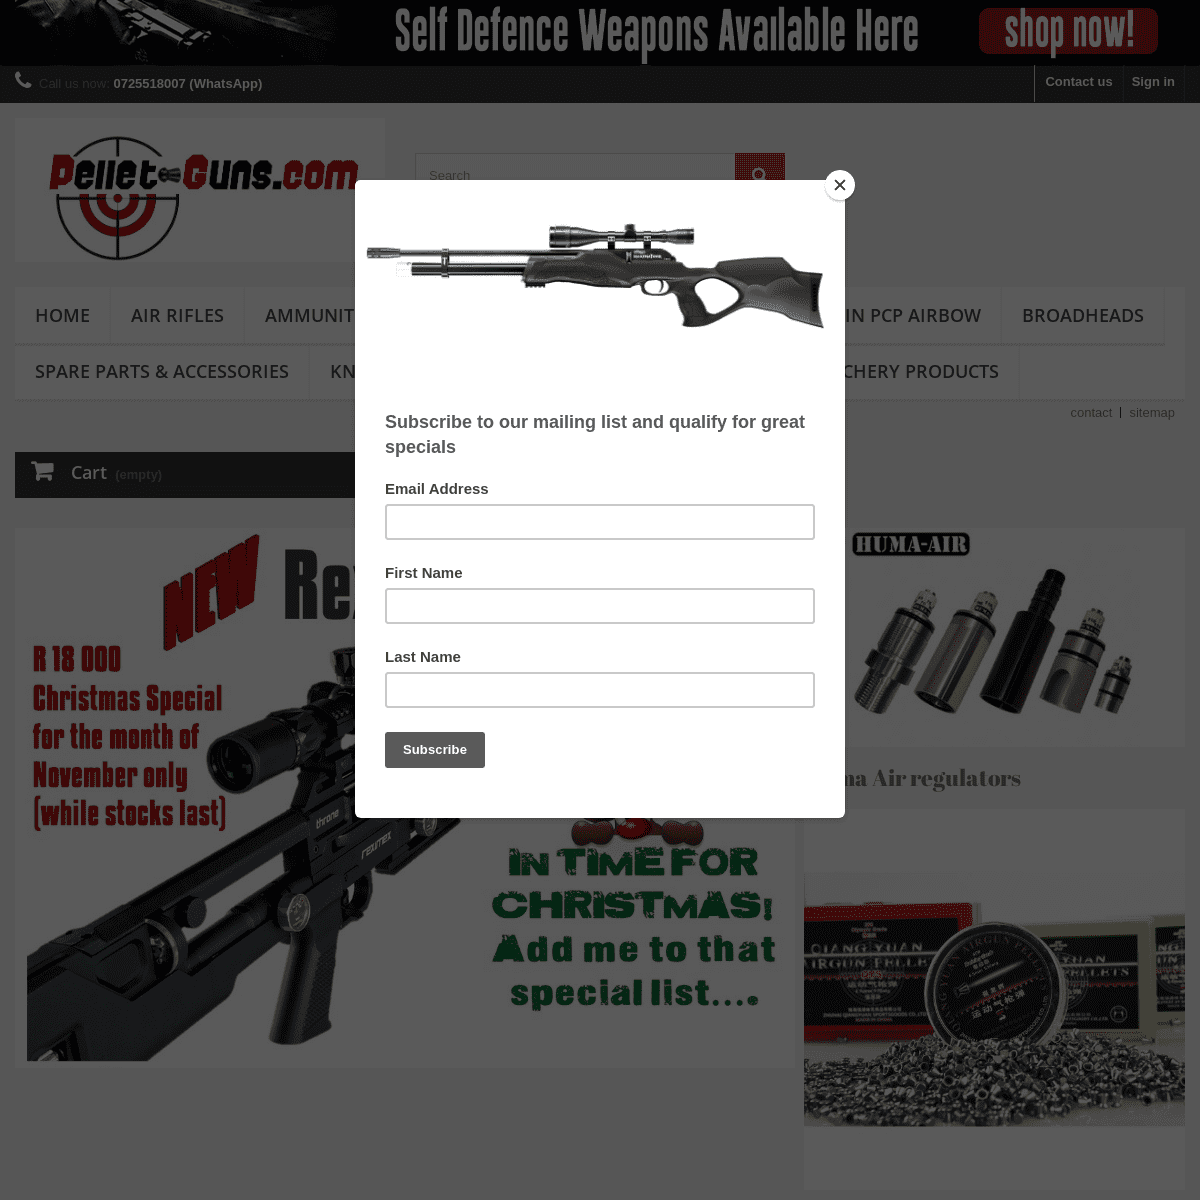 A complete backup of pellet-guns.com